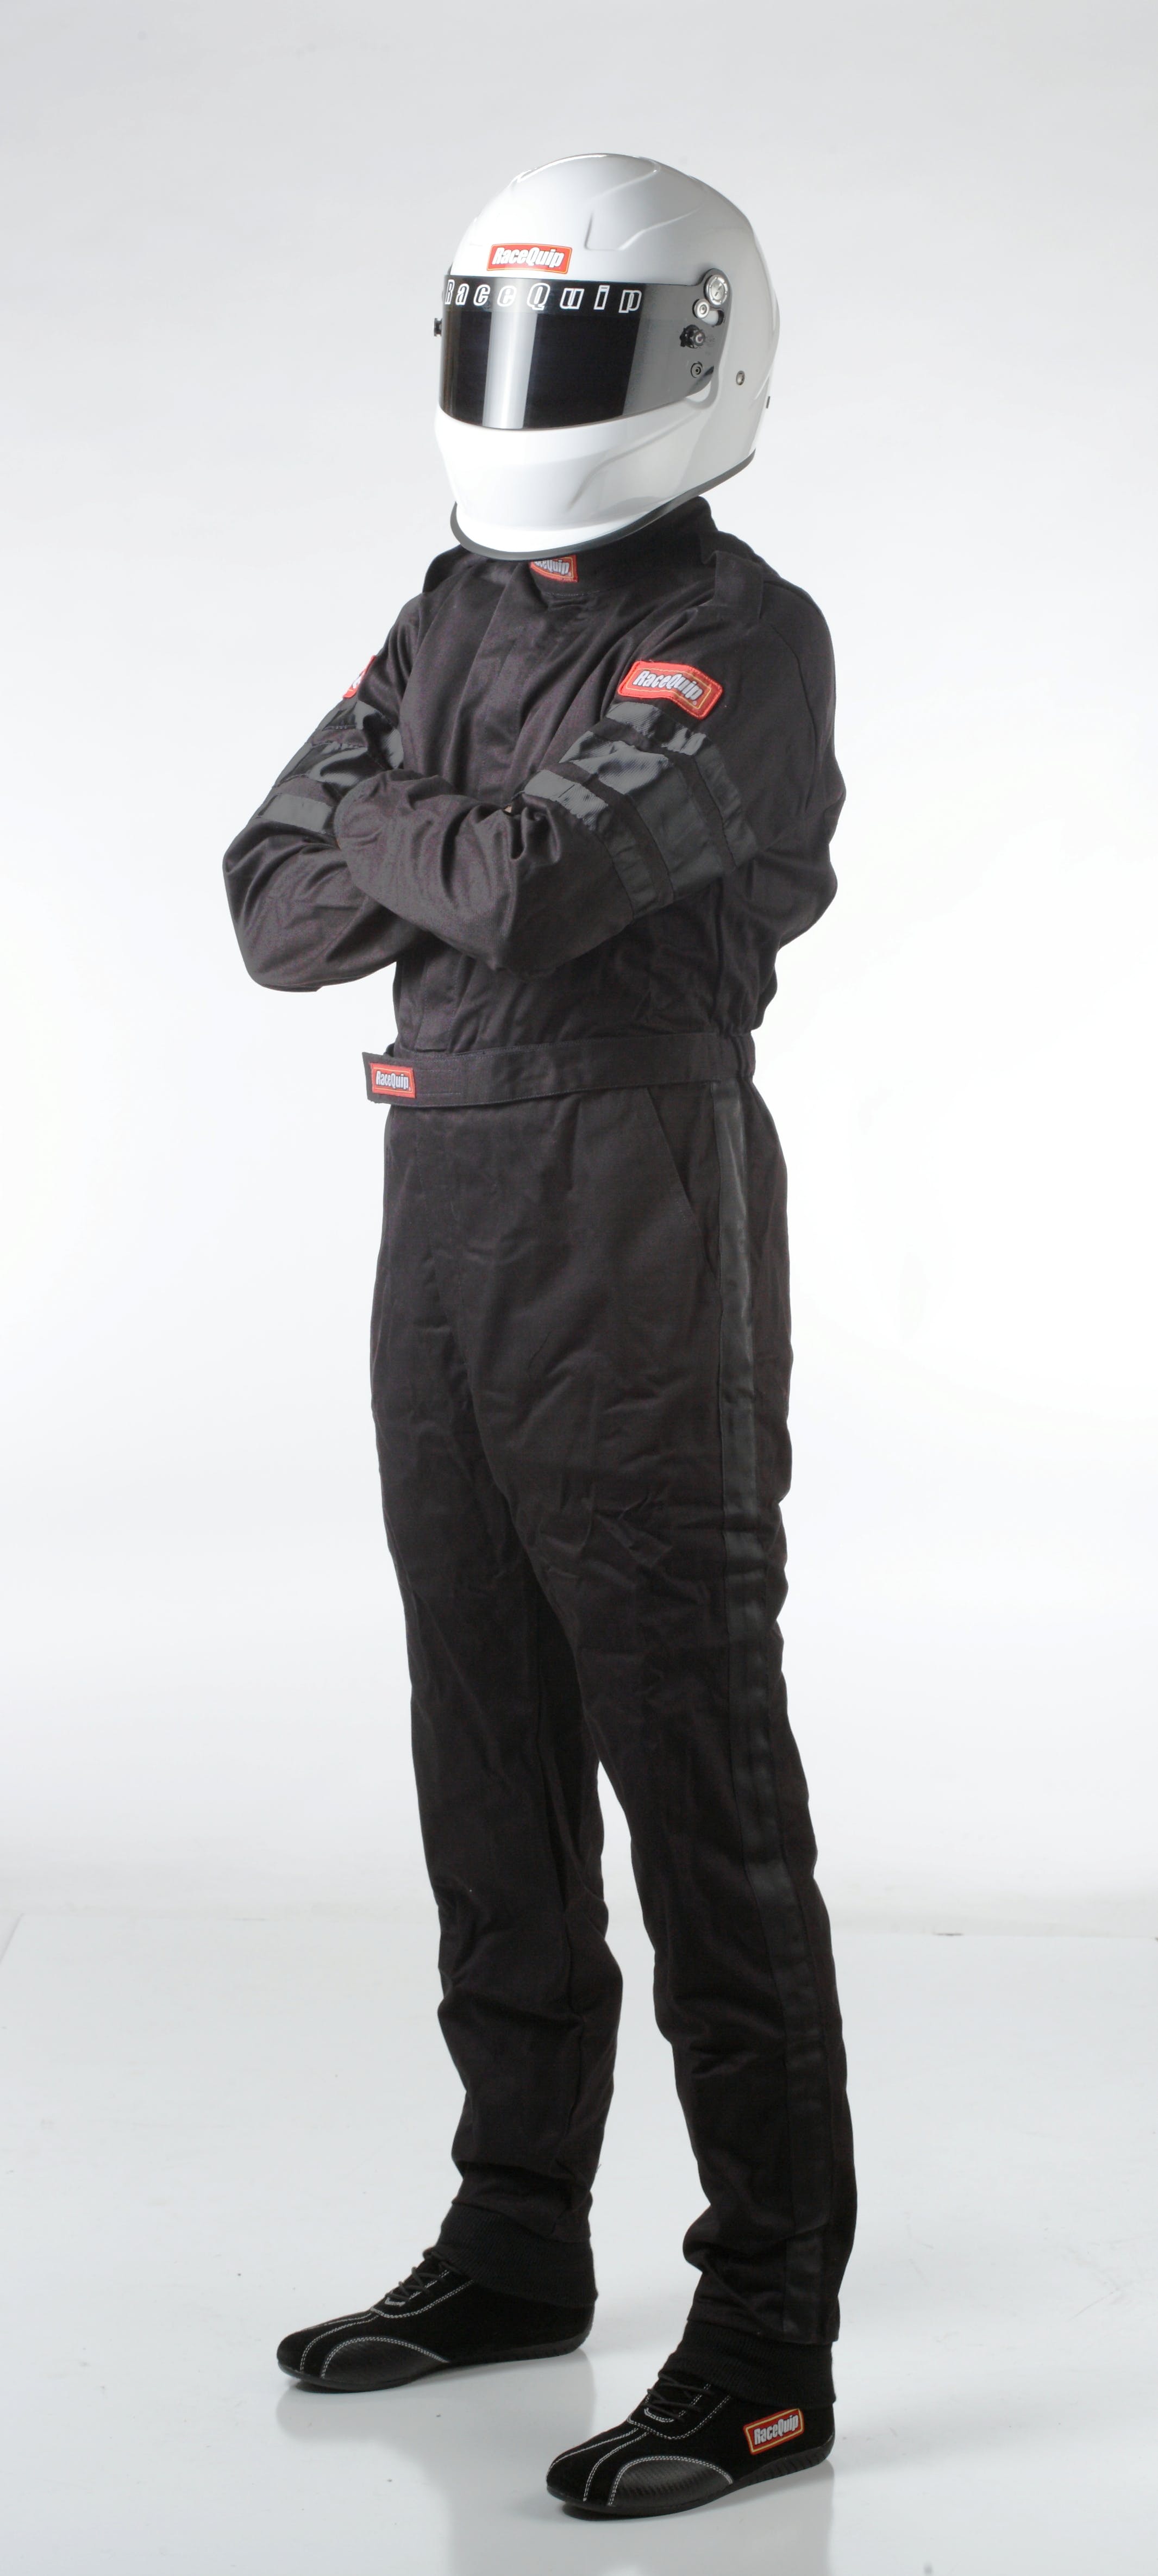 RaceQuip 110004 SFI-1 Pyrovatex One-Piece Single-Layer Racing Fire Suit (Black, Medium-Tall)